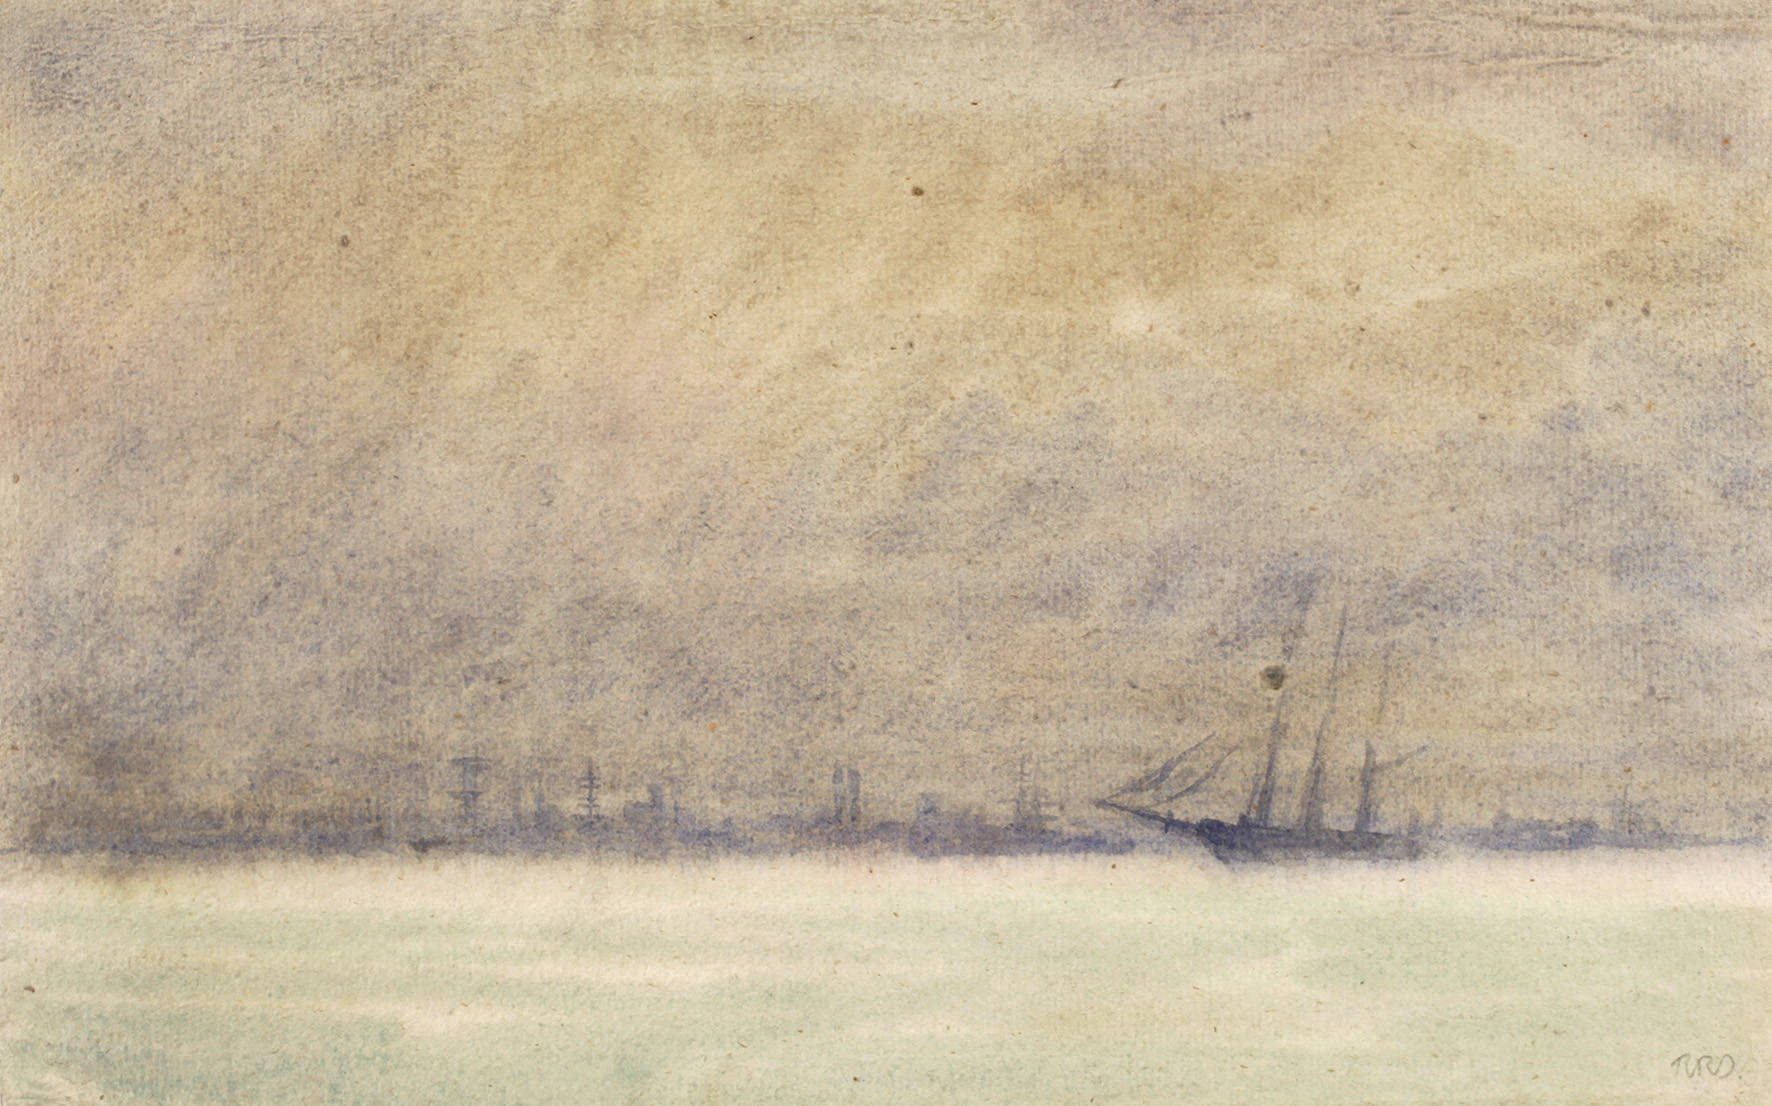 Reinhard Rudolf Junghanns, ”Hafen im Nebel”